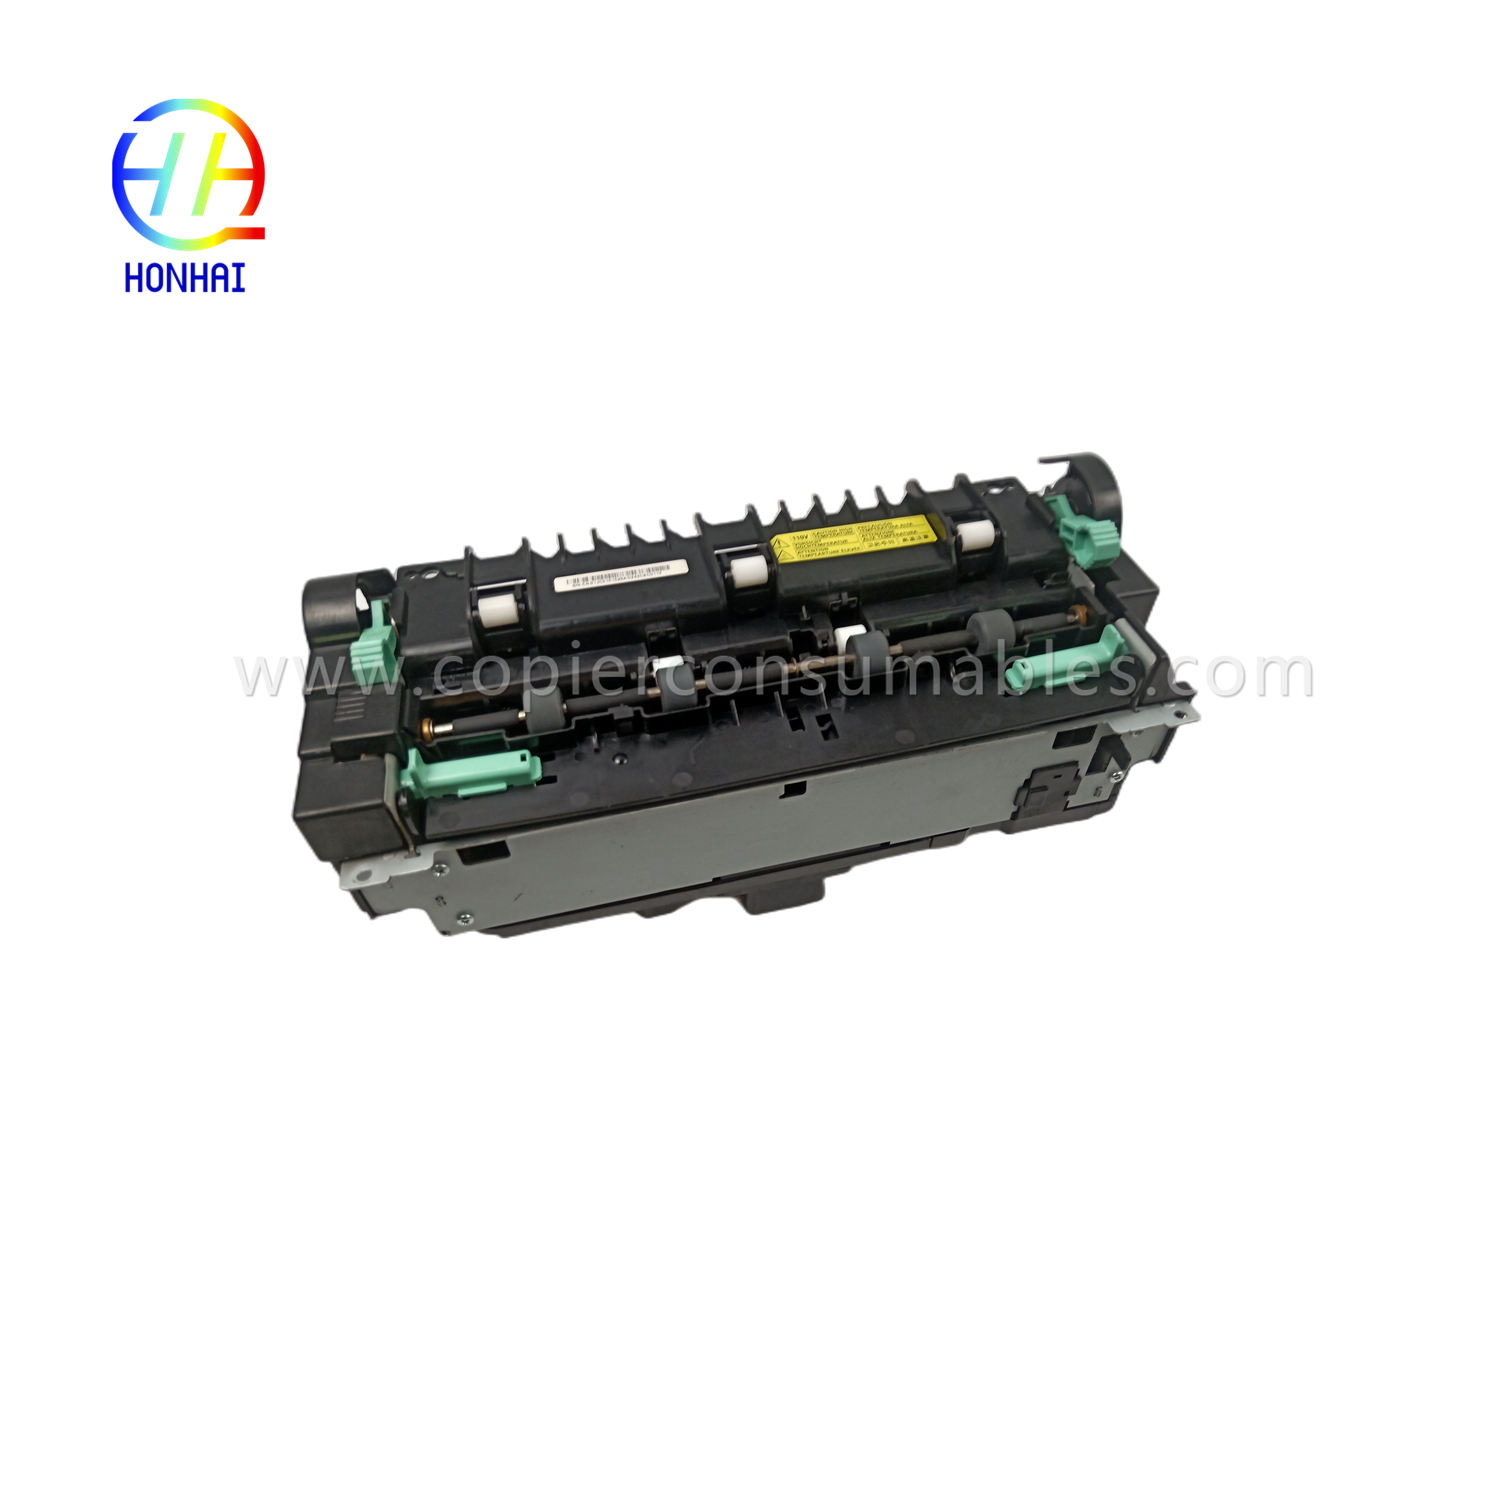 Fuser Unit for Samsung ML4510 ML4512 ML-4510ND ML-4512ND ML-4510 ML-4512  Fusing Assembly  JC91-01028A  (6)